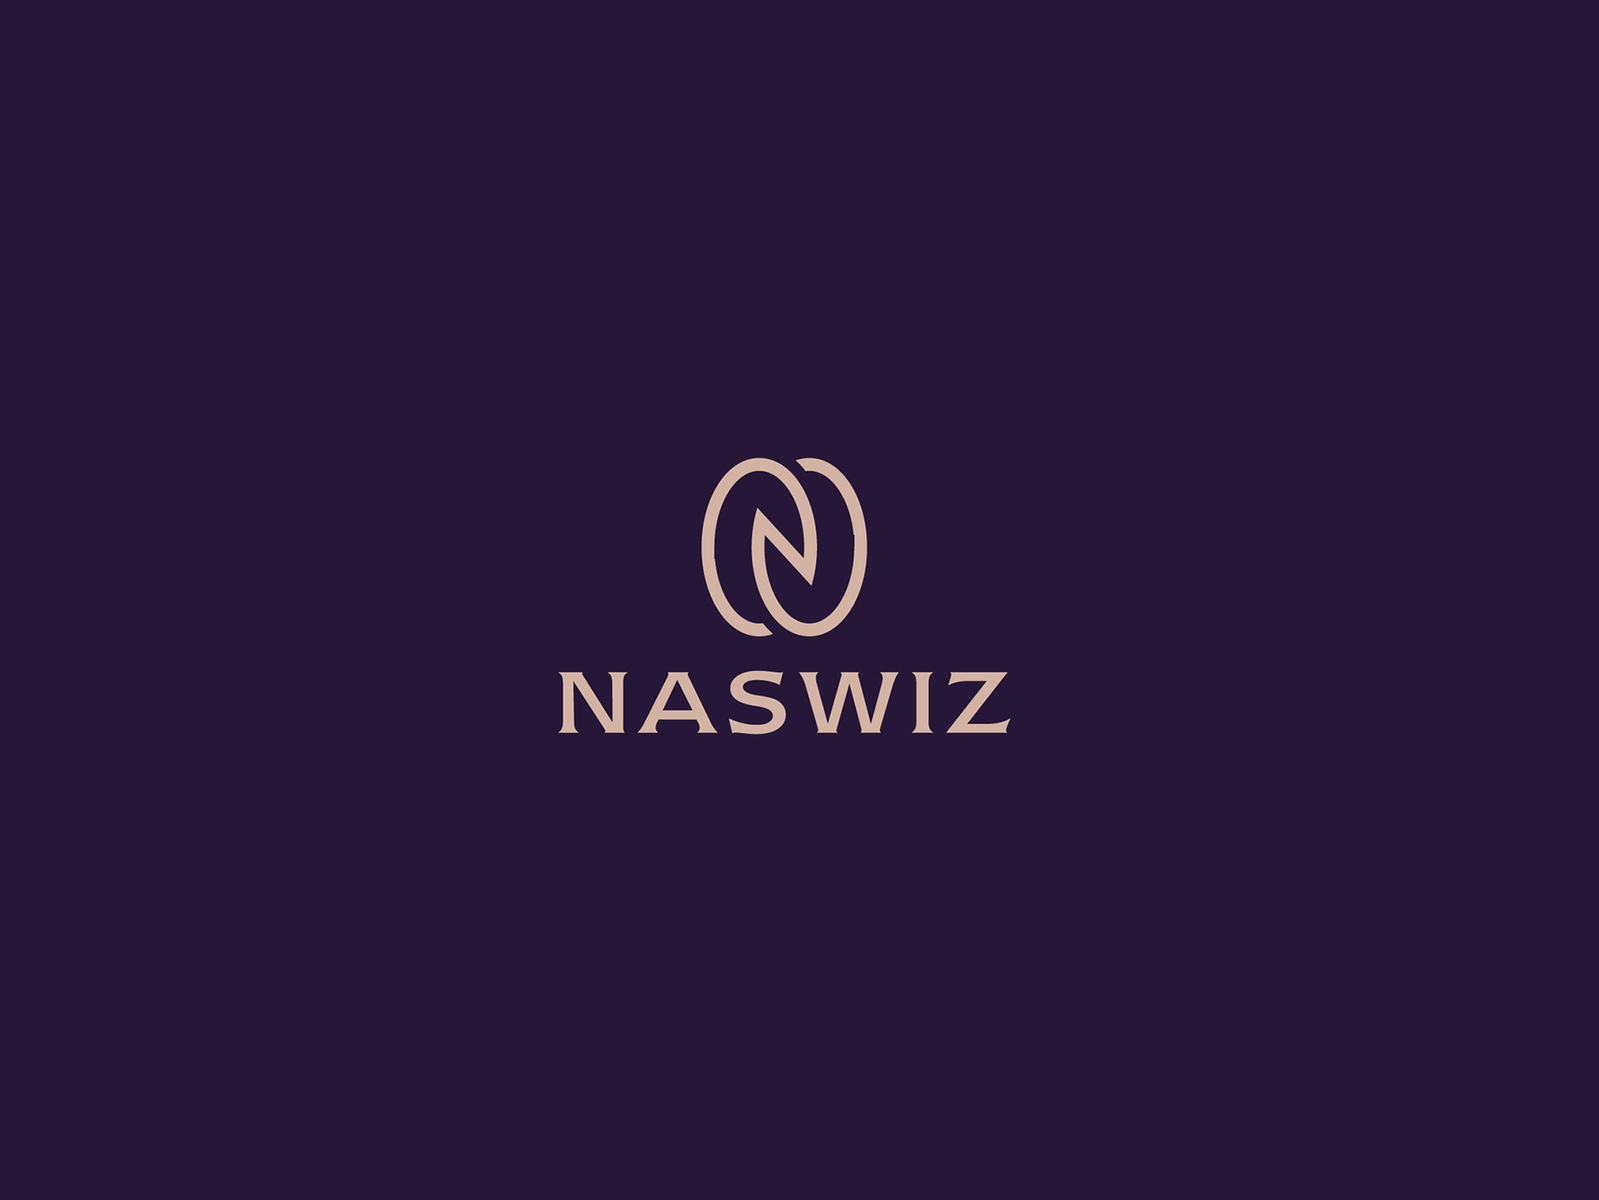 Naswiz Company is real or fake | Naswiz is fake or not - YouTube